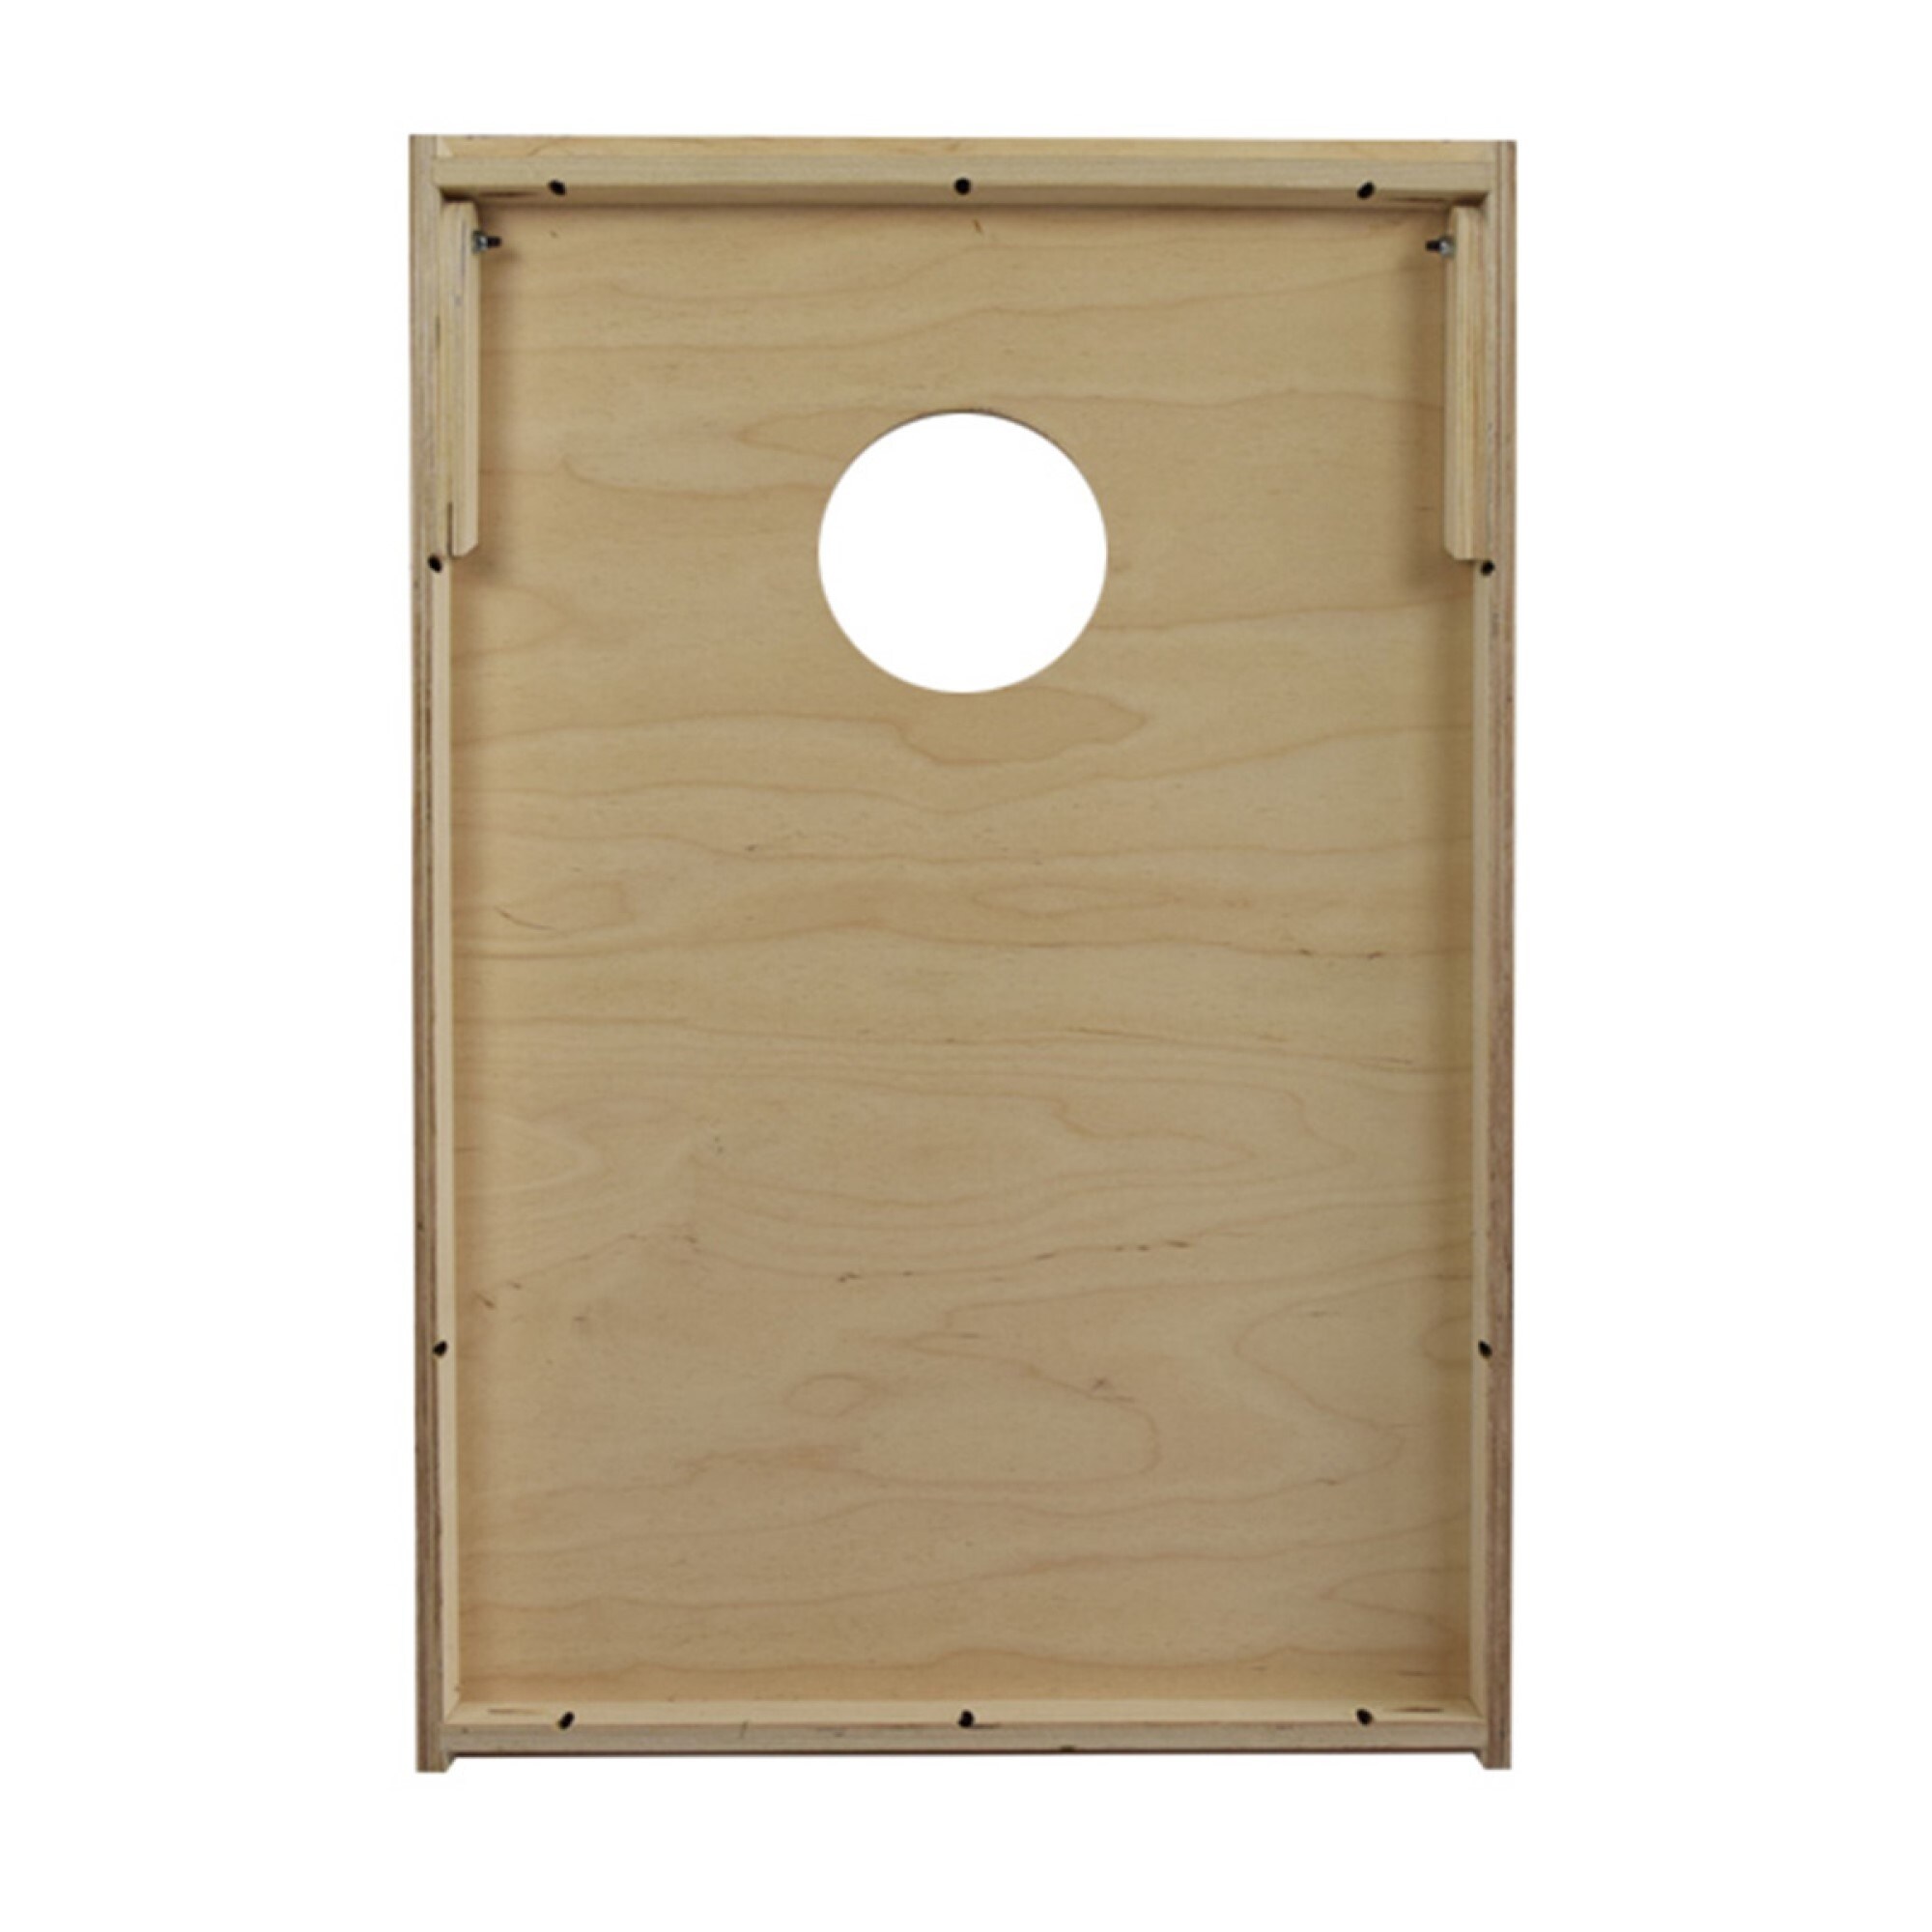 St Louis Solid Wood Cornhole Board Set (Includes 8 Bags)